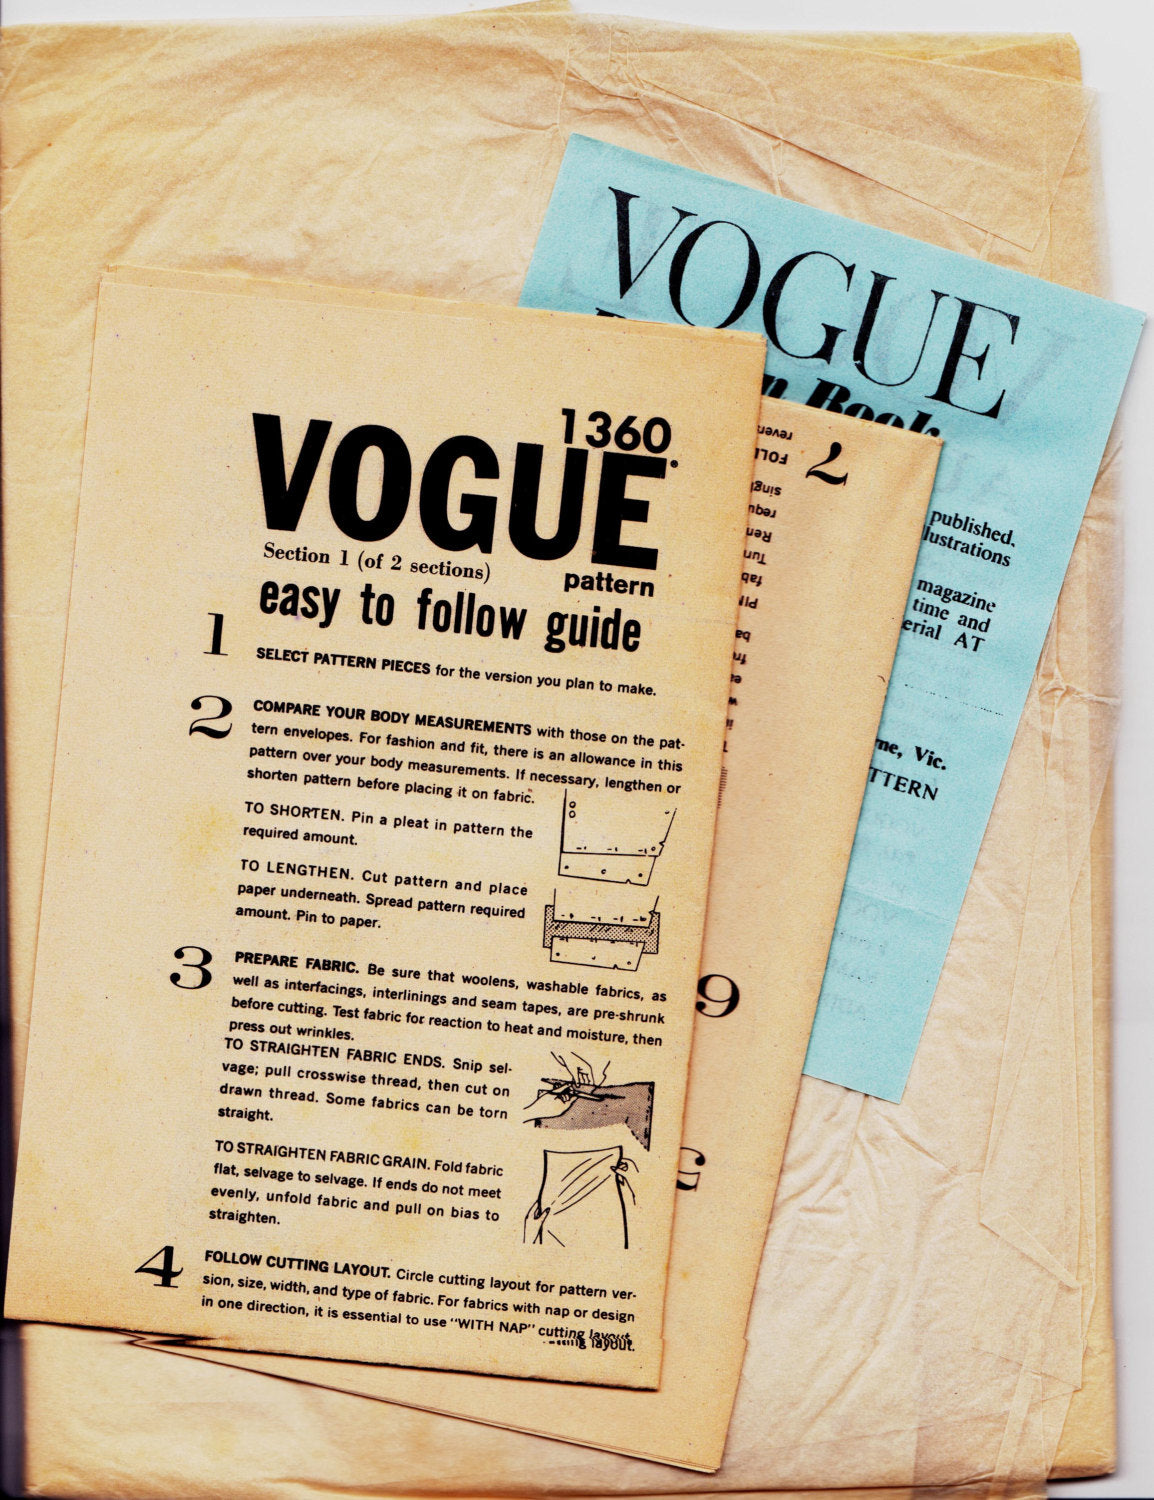 Vogue Paris Original 1360 JACQUES GRIFFE Womens Mod Dress & Jacket 1960s Vintage Sewing Pattern Size 14 Bust 34 inches UNUSED Factory Folded